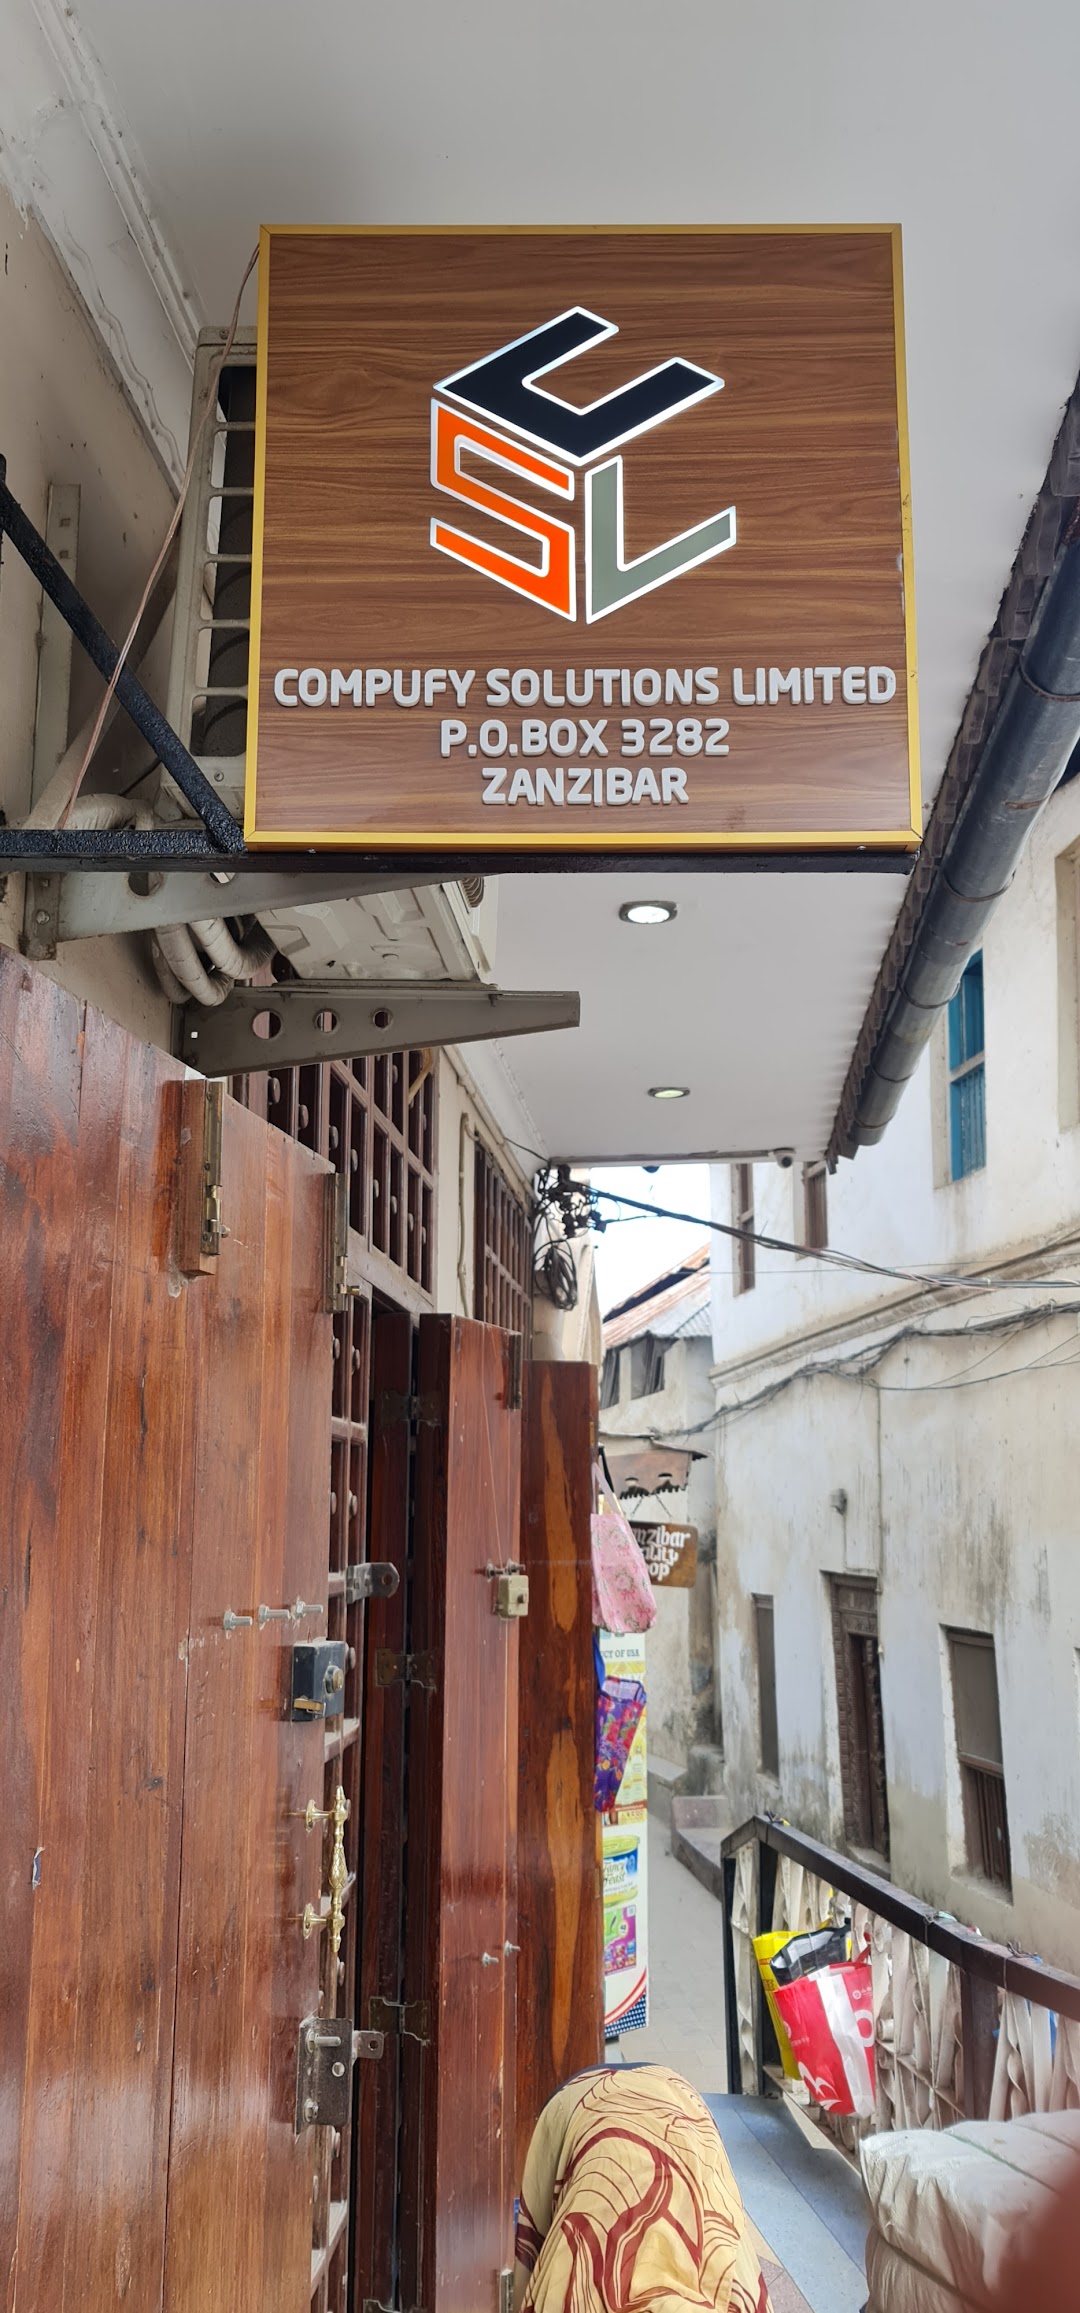 COMPUFY SOLUTIONS LIMITED - ZANZIBAR